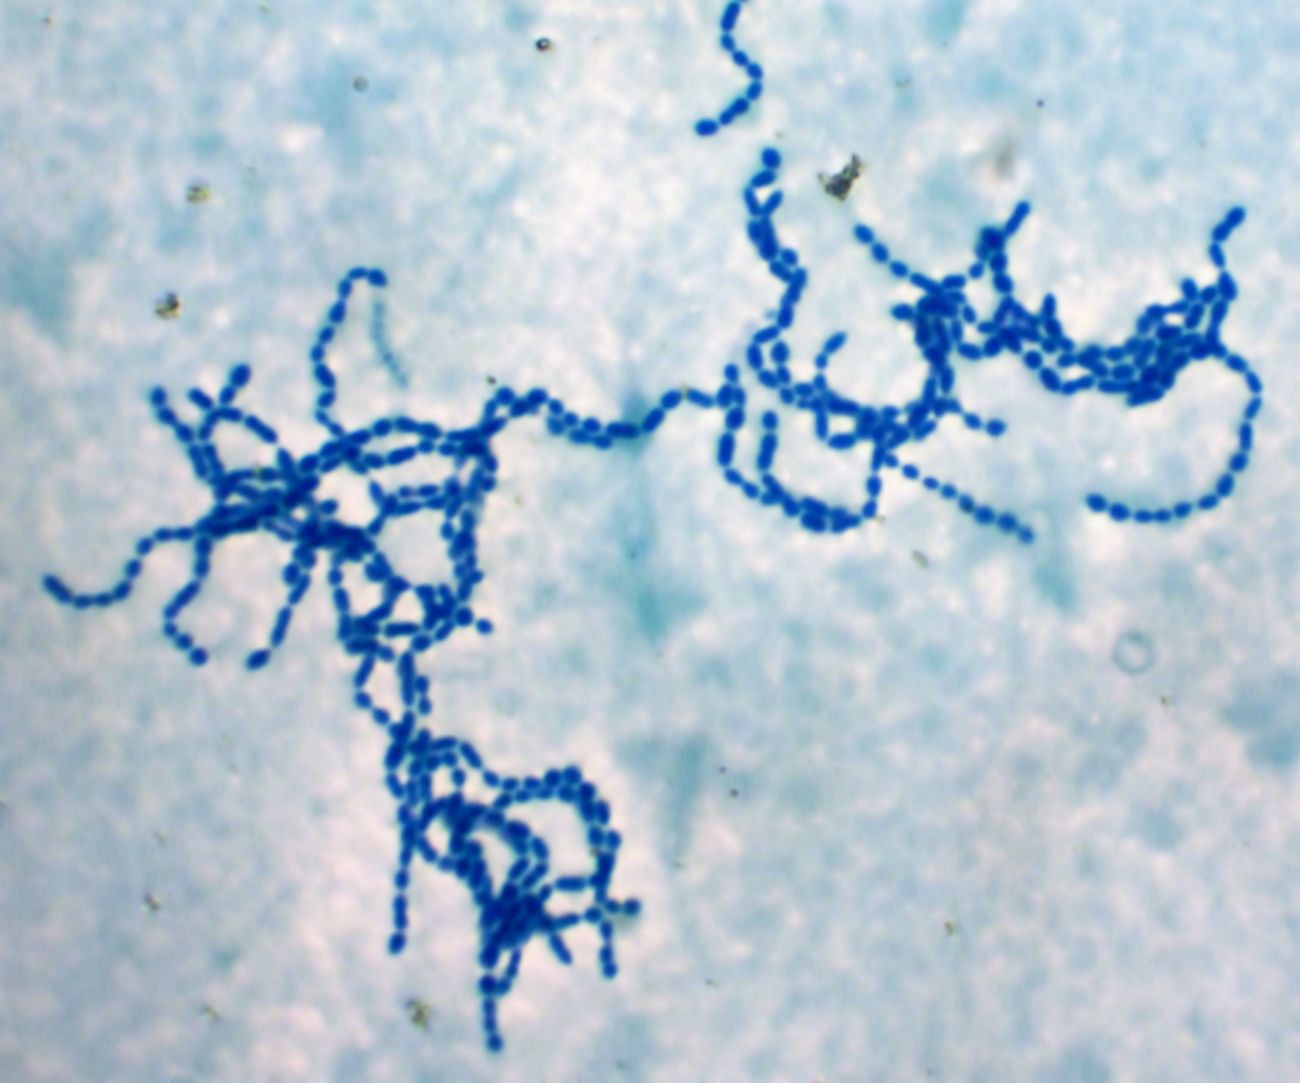 Łańcuchy komórek bakterii Streptococcus pyogenes